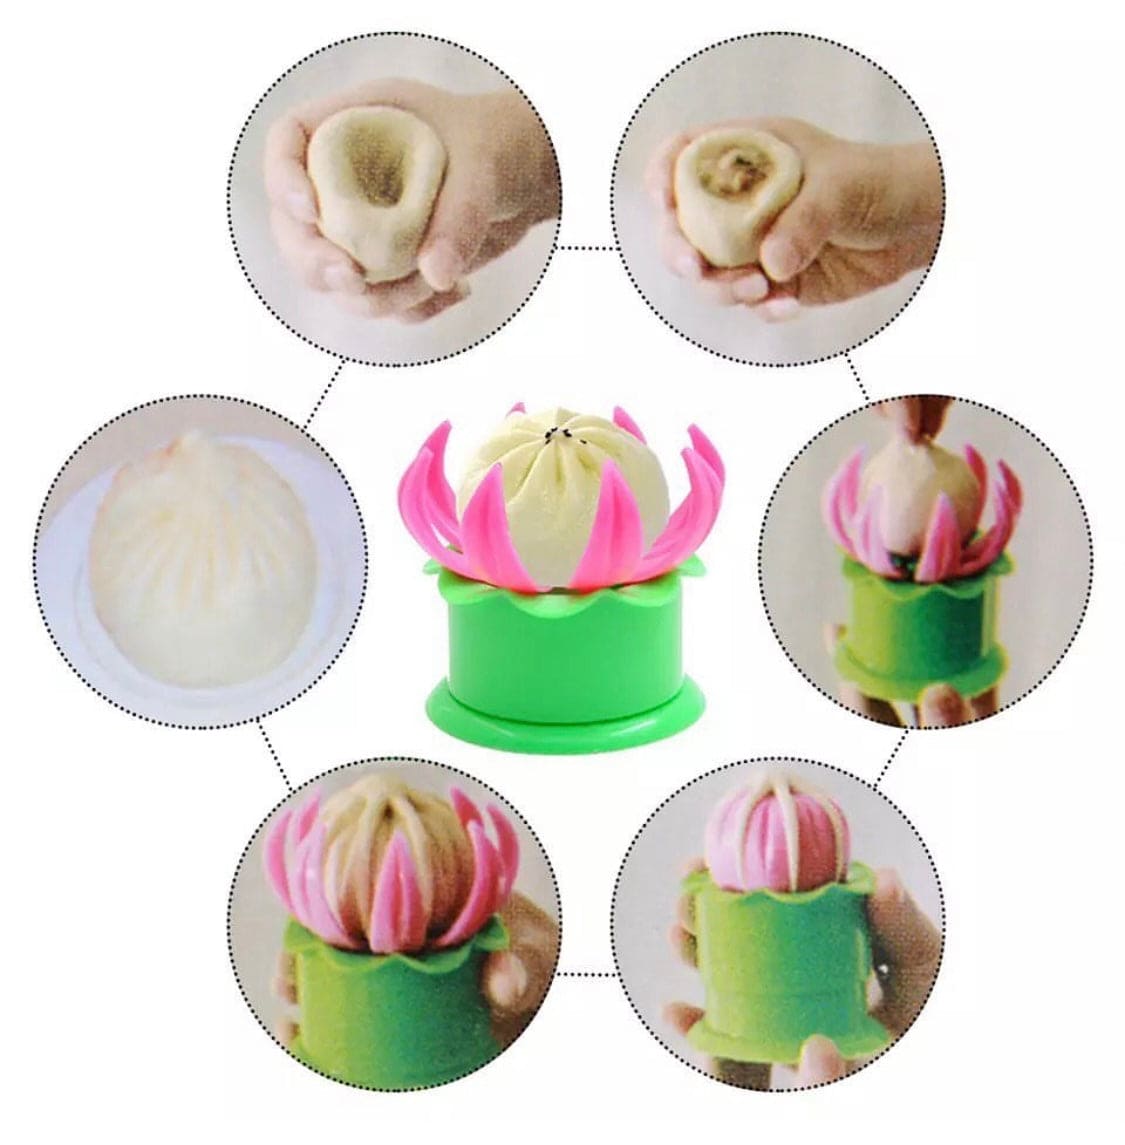 Flower Dumpling Maker, Kitchen DIY Pastry Pie Dumpling Maker, Steamed Stuffed Bun Making Mold, Lotus Flower Chinese Baozi Making Mold